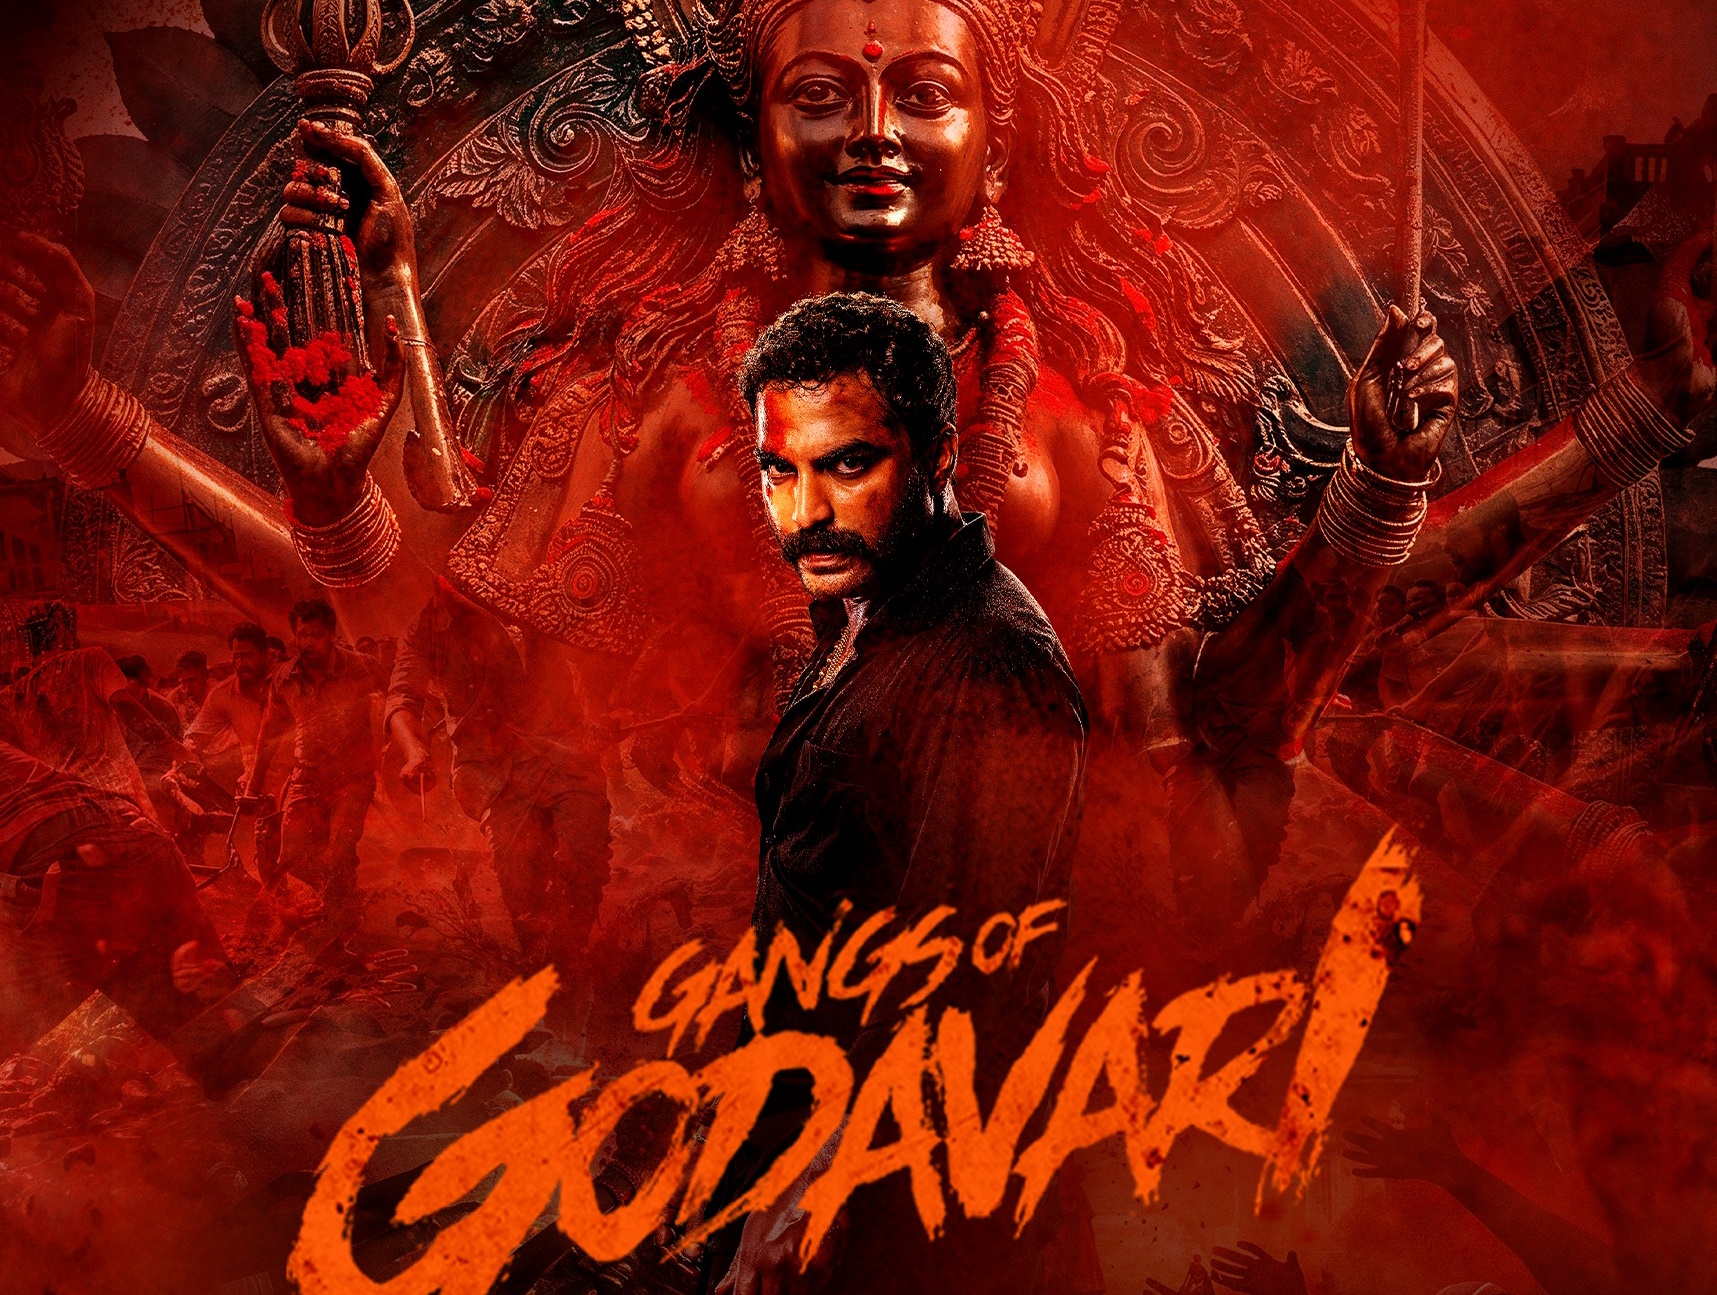 What The... ‘Gangs of Godavari’ on OTT in 2 Weeks